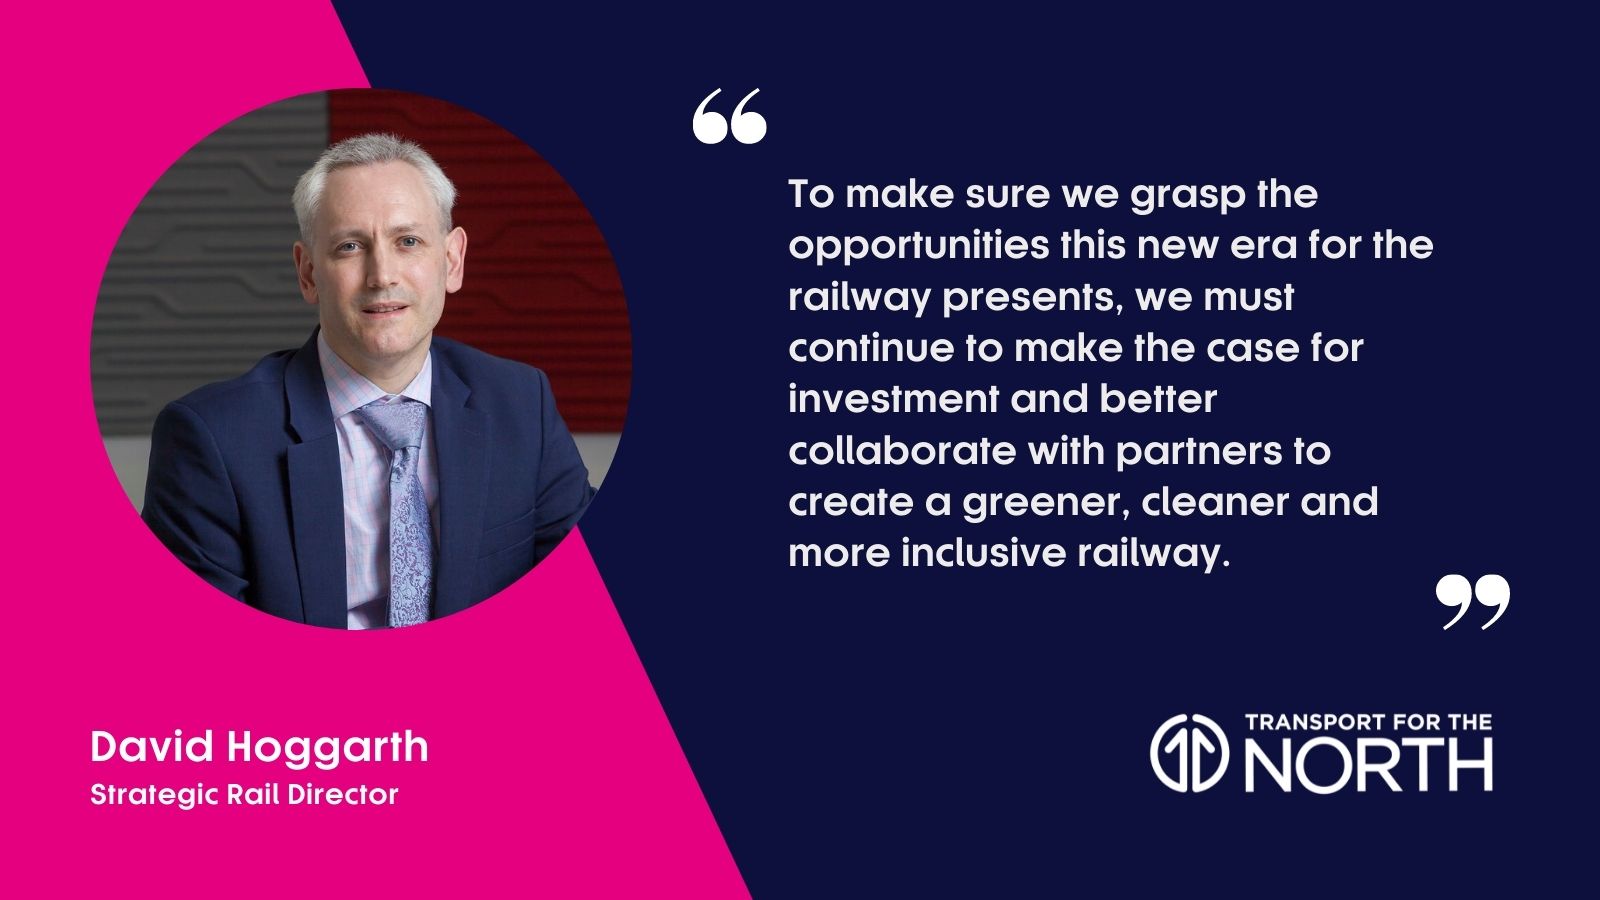 David Hoggarth on the new era for the railways